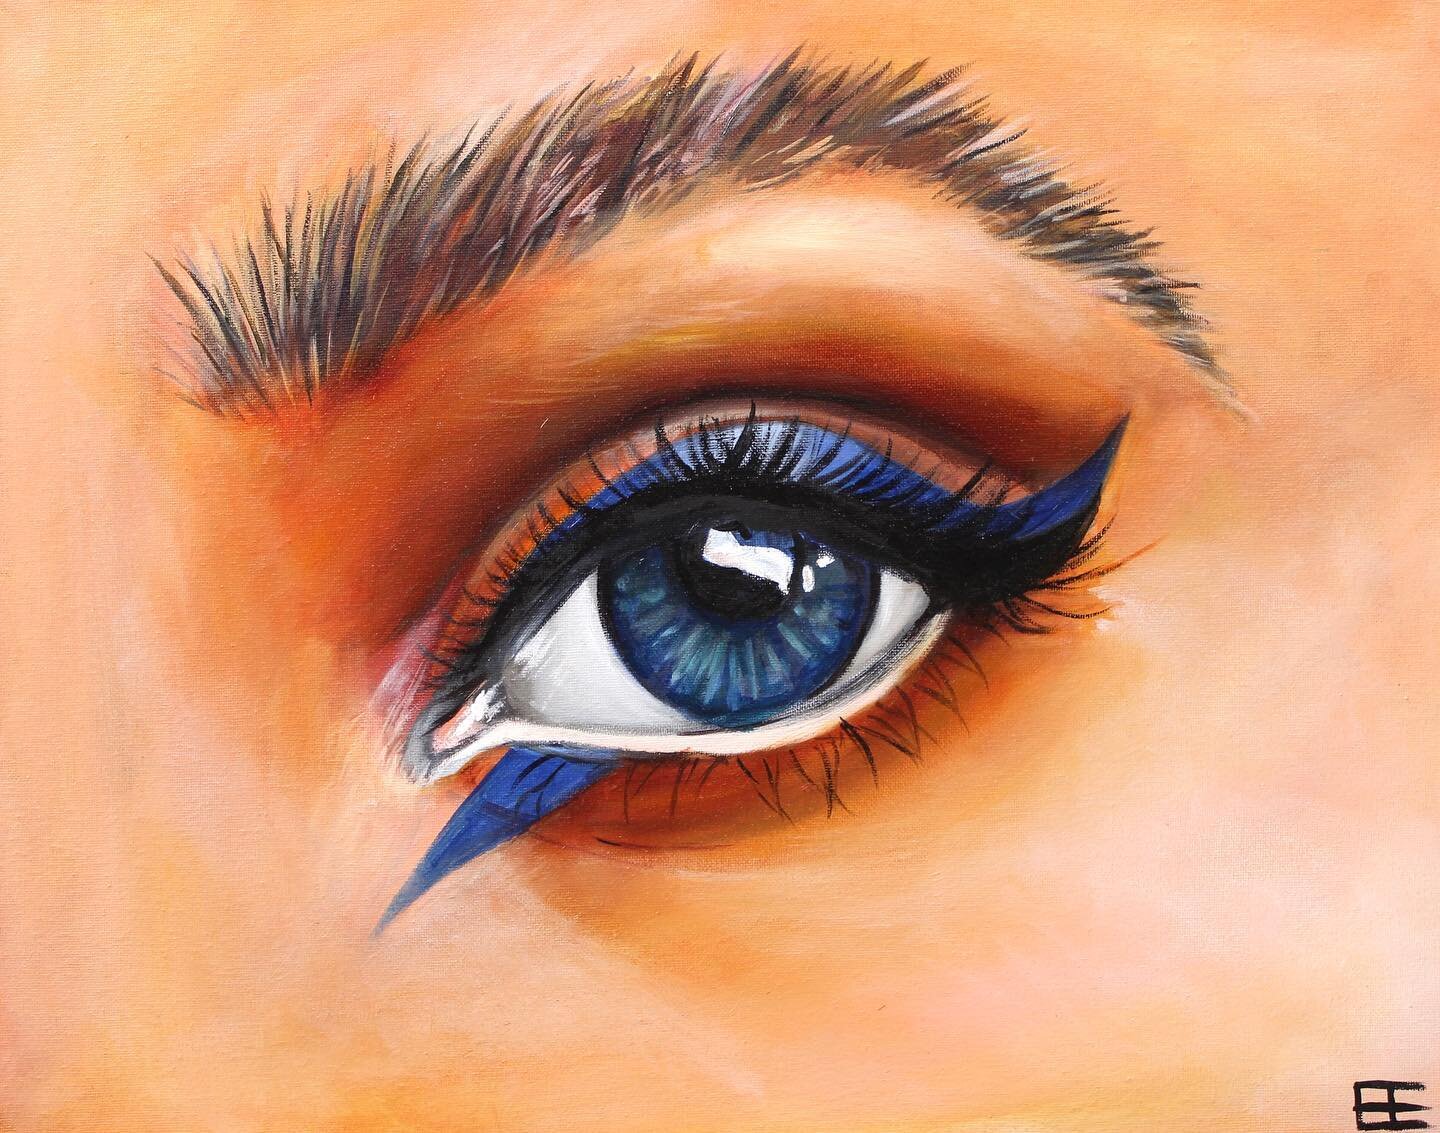 &ldquo;Eye See You&rdquo; Oil Painting
Artist: Ellie England, age 15
.
.
.
#acrylic #painting #acrylicpainting #instaart #art #artclass #artstudent #utahart #utahartist #sydneybowmanartclass #eye #eyepainting #paintingofaneye #photorealism #utahartis